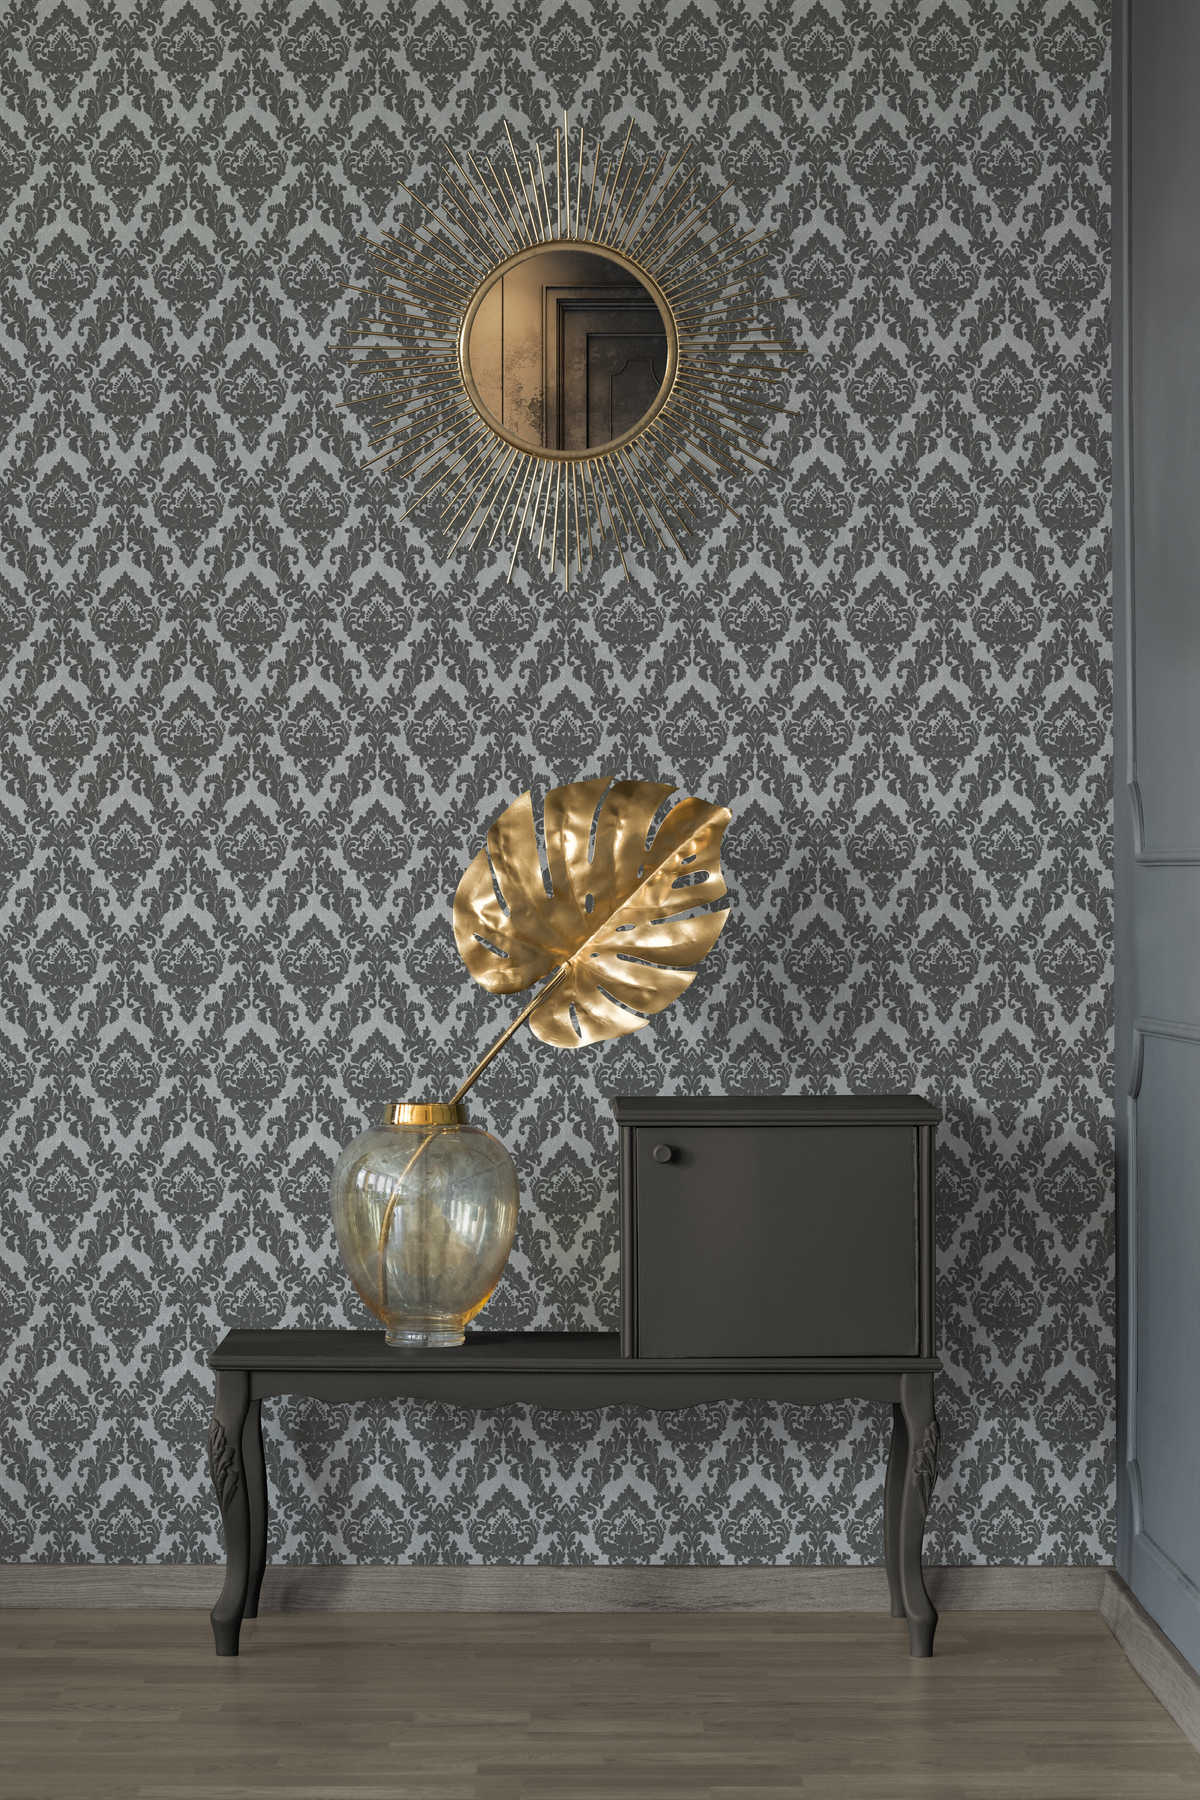             Ornament Tapete mit Flock & Seidenglanz – Grau
        